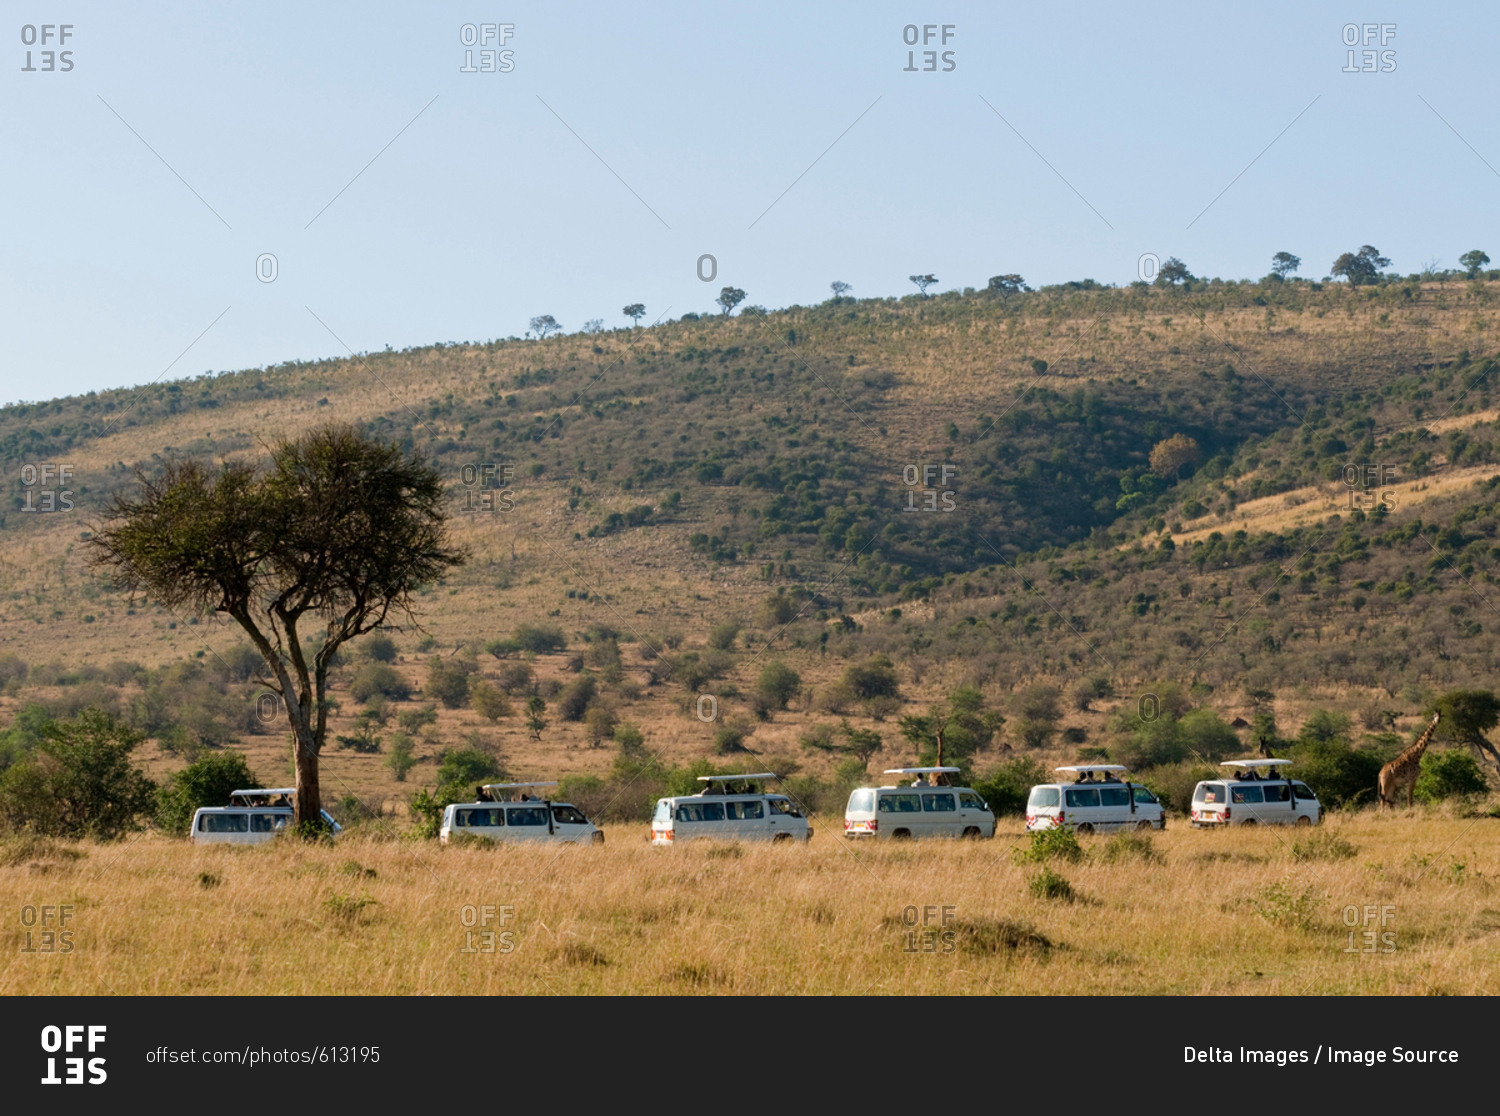 Tourists on safari, watching giraffes, Masai Mara National Reserve, Kenya